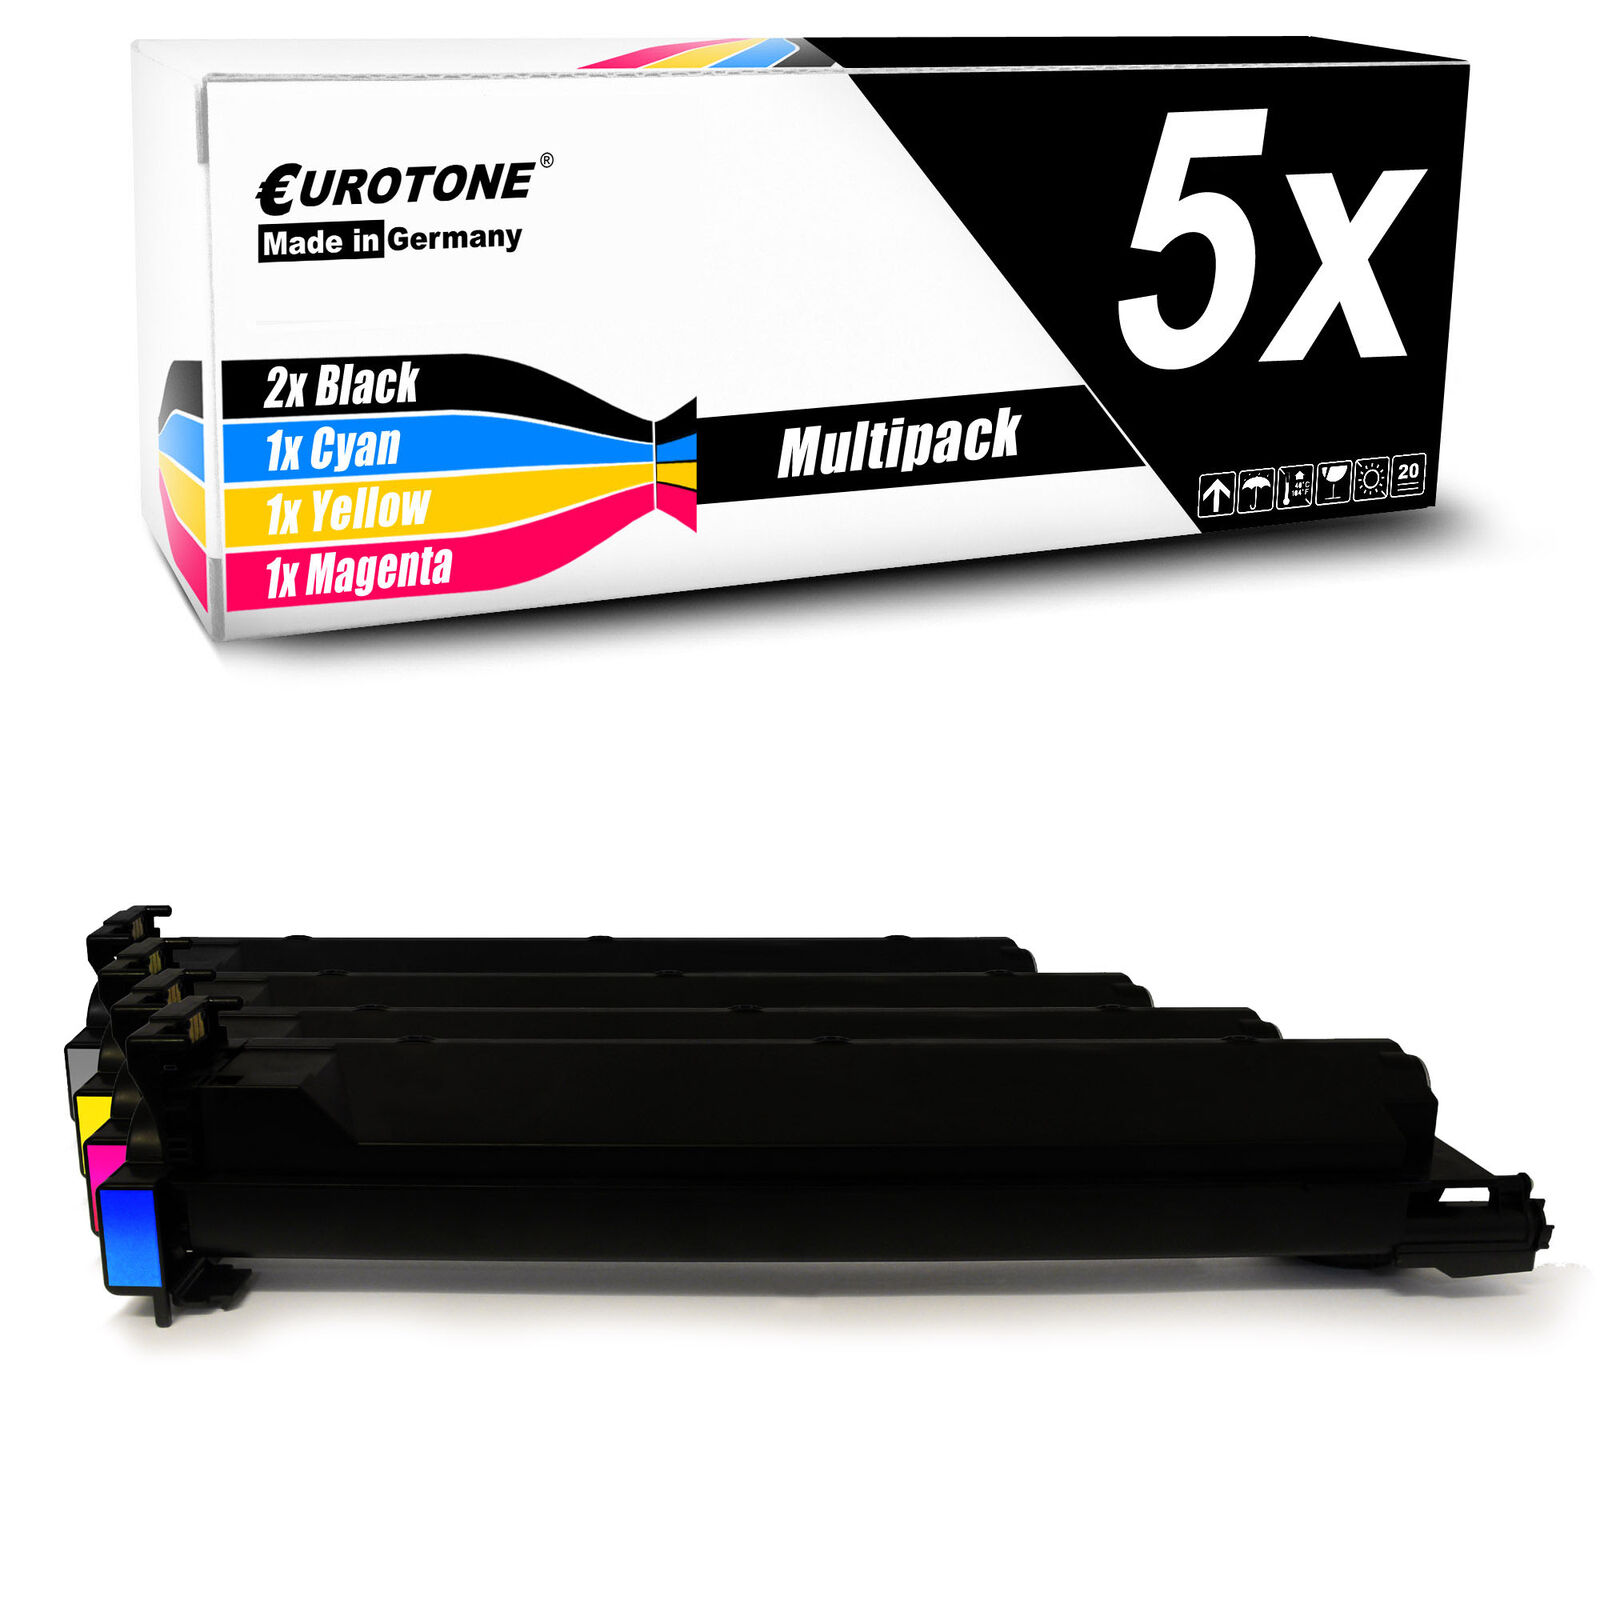 5x Cartridge Filter Cleaner for Konica Minolta Bizhub